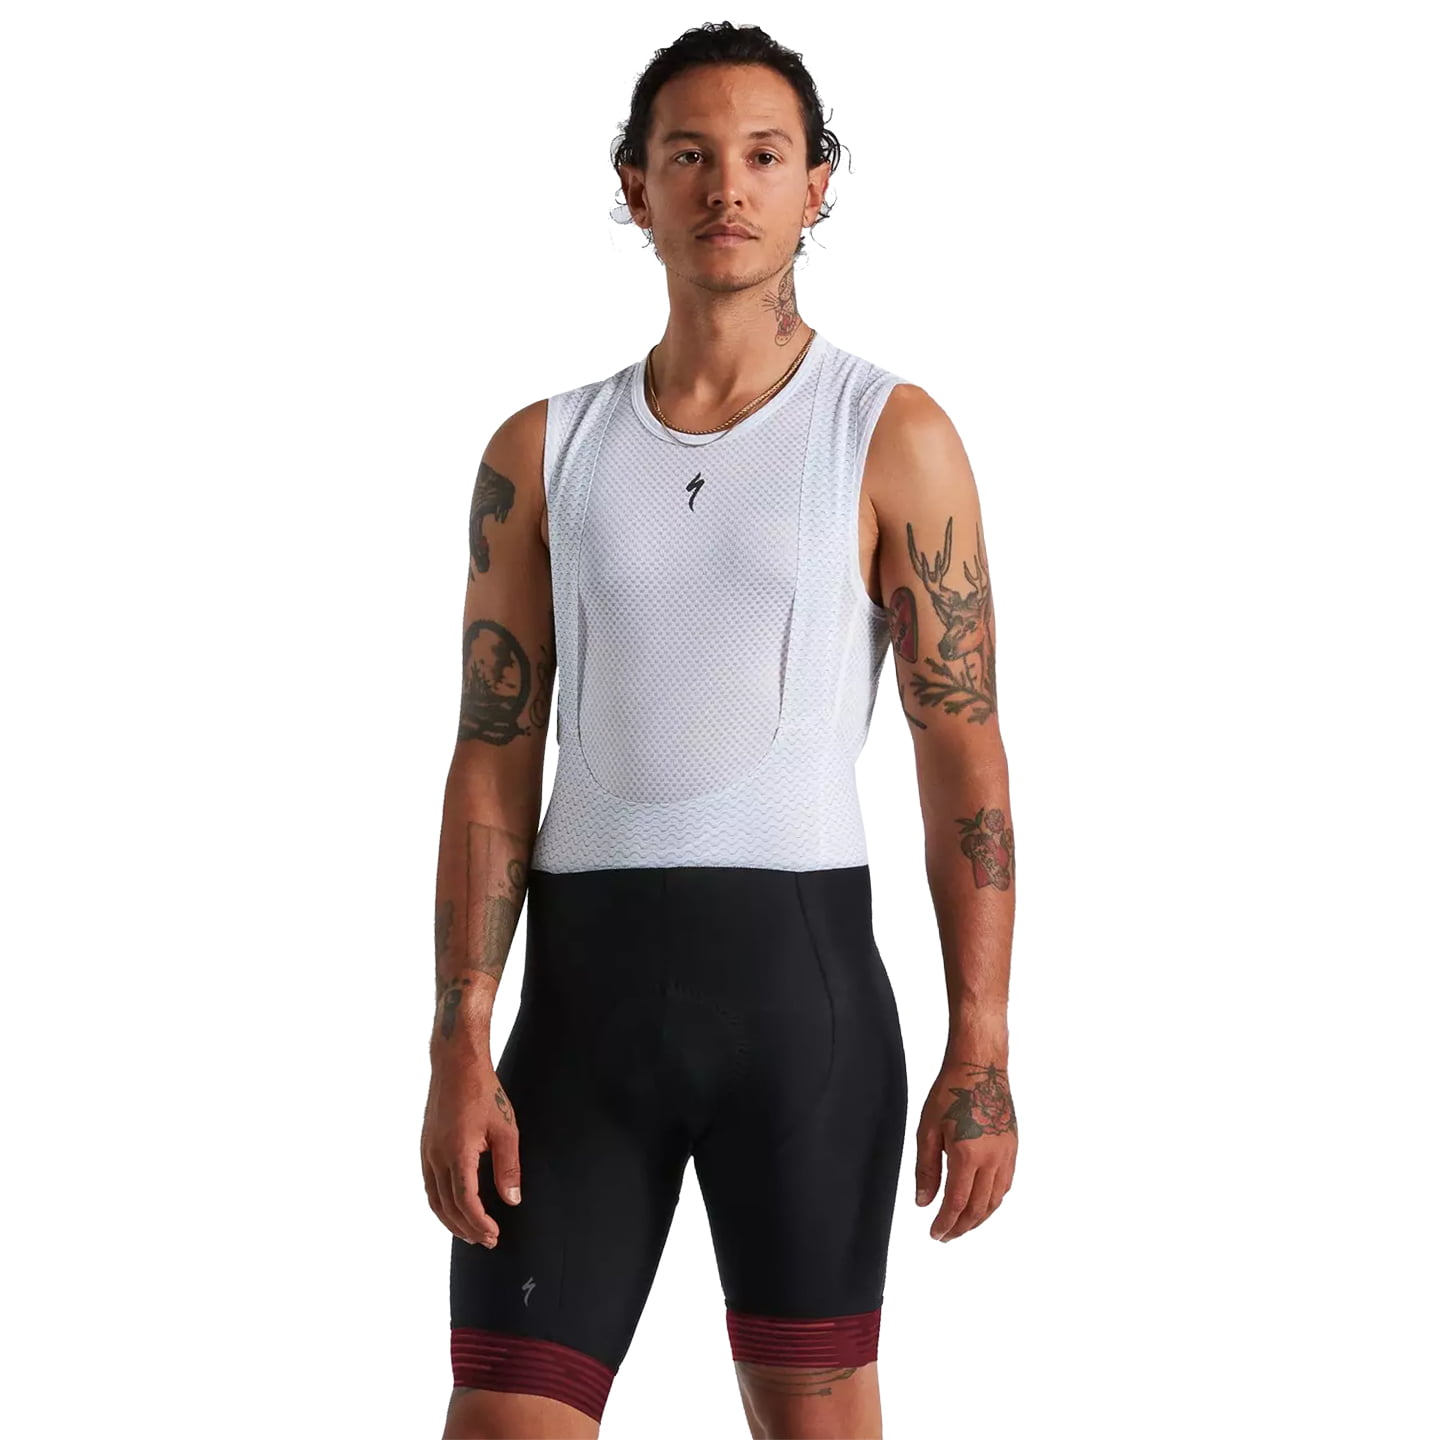 SPECIALIZED SL Blur Bib Shorts Bib Shorts, for men, size L, Cycle shorts, Cycling clothing